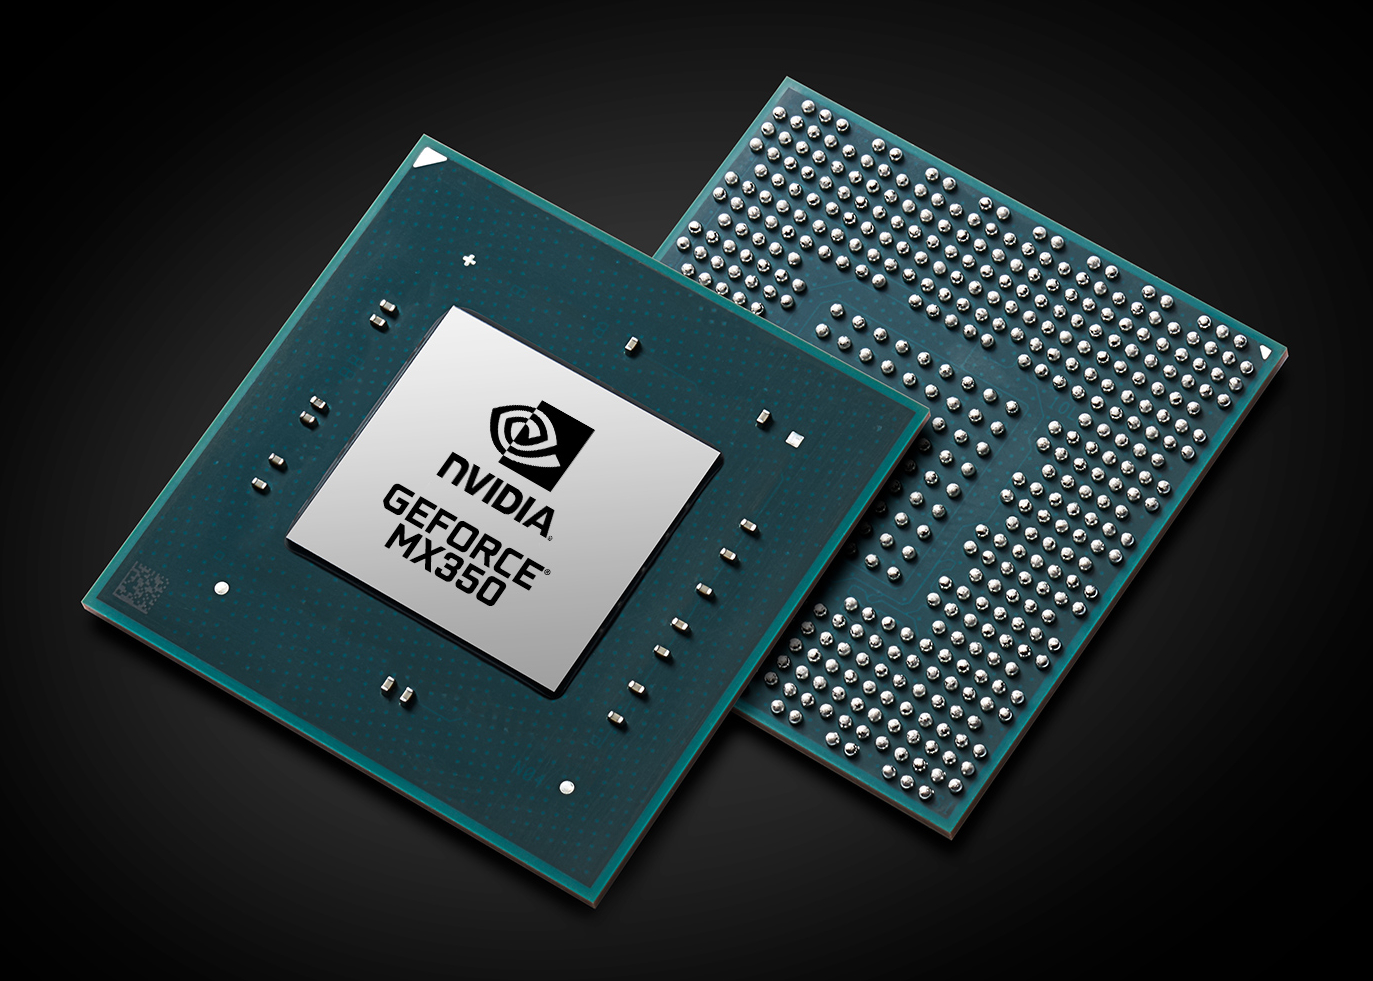 Nvidia Geforce Mx350 Laptop Graphics Card Notebookcheck Net Tech